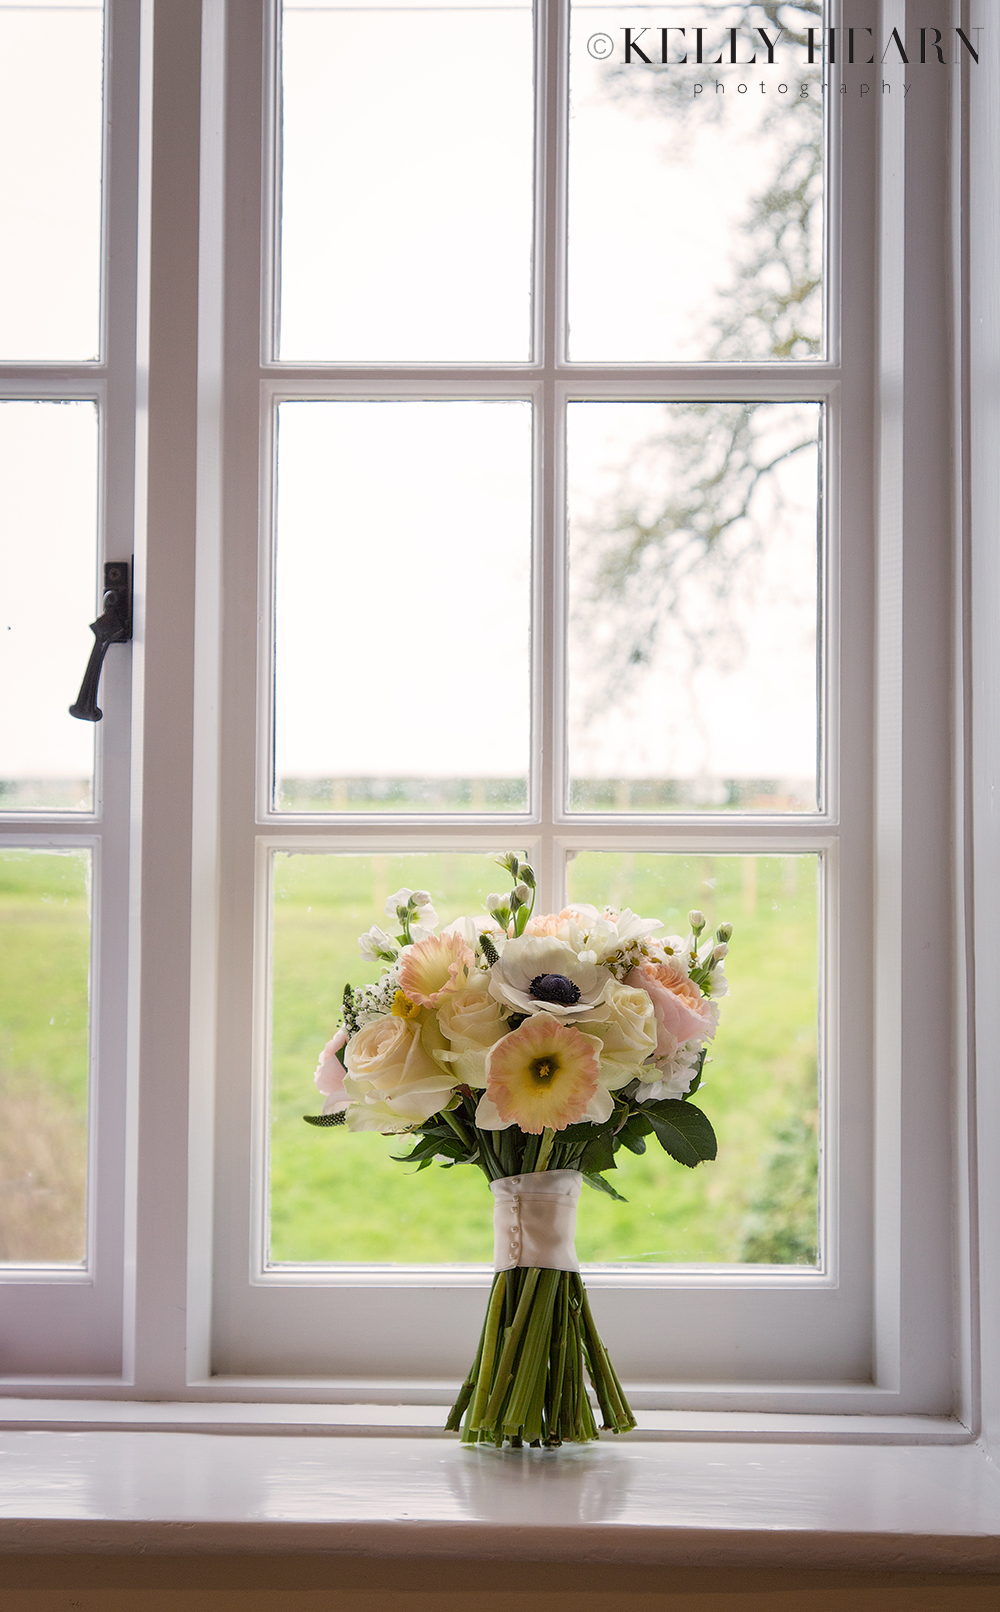 NAX_bouquet-in-window.jpg#asset:2031